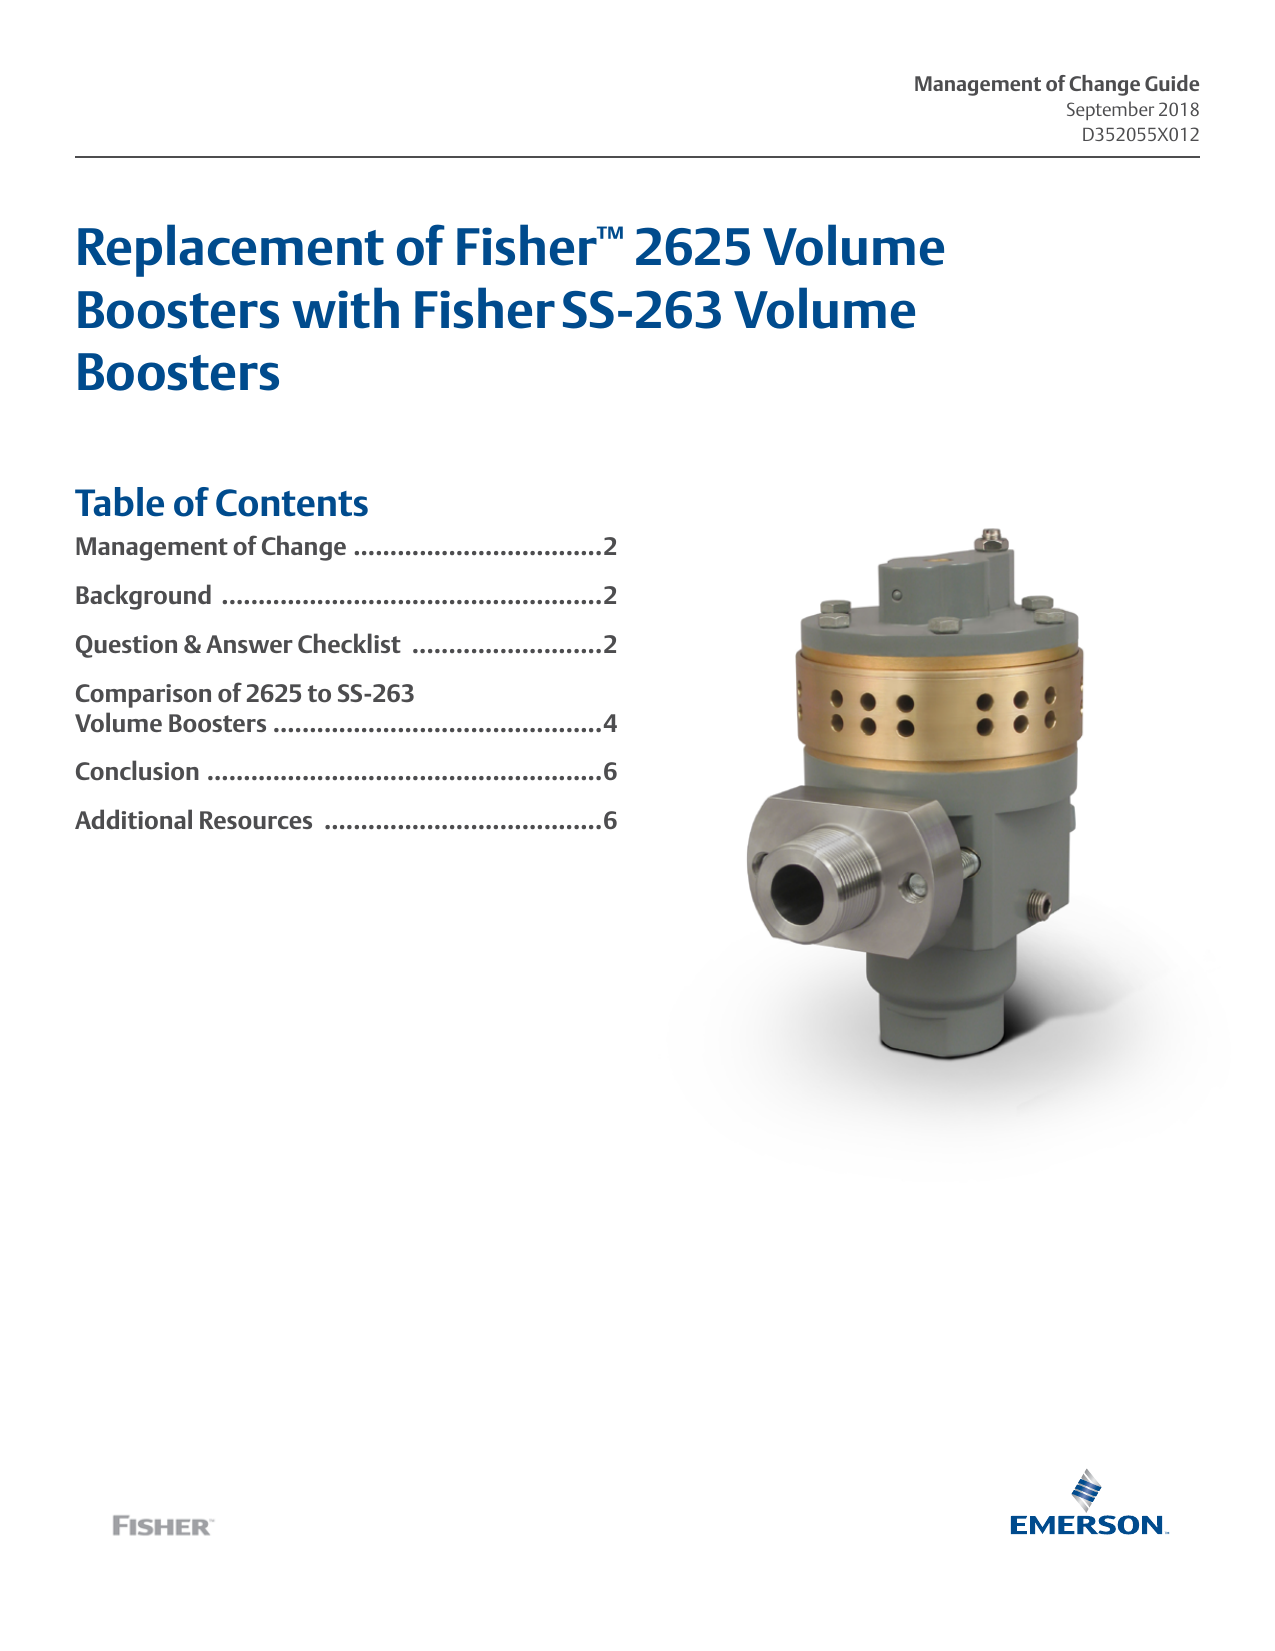 fisher 377 trip valve manual